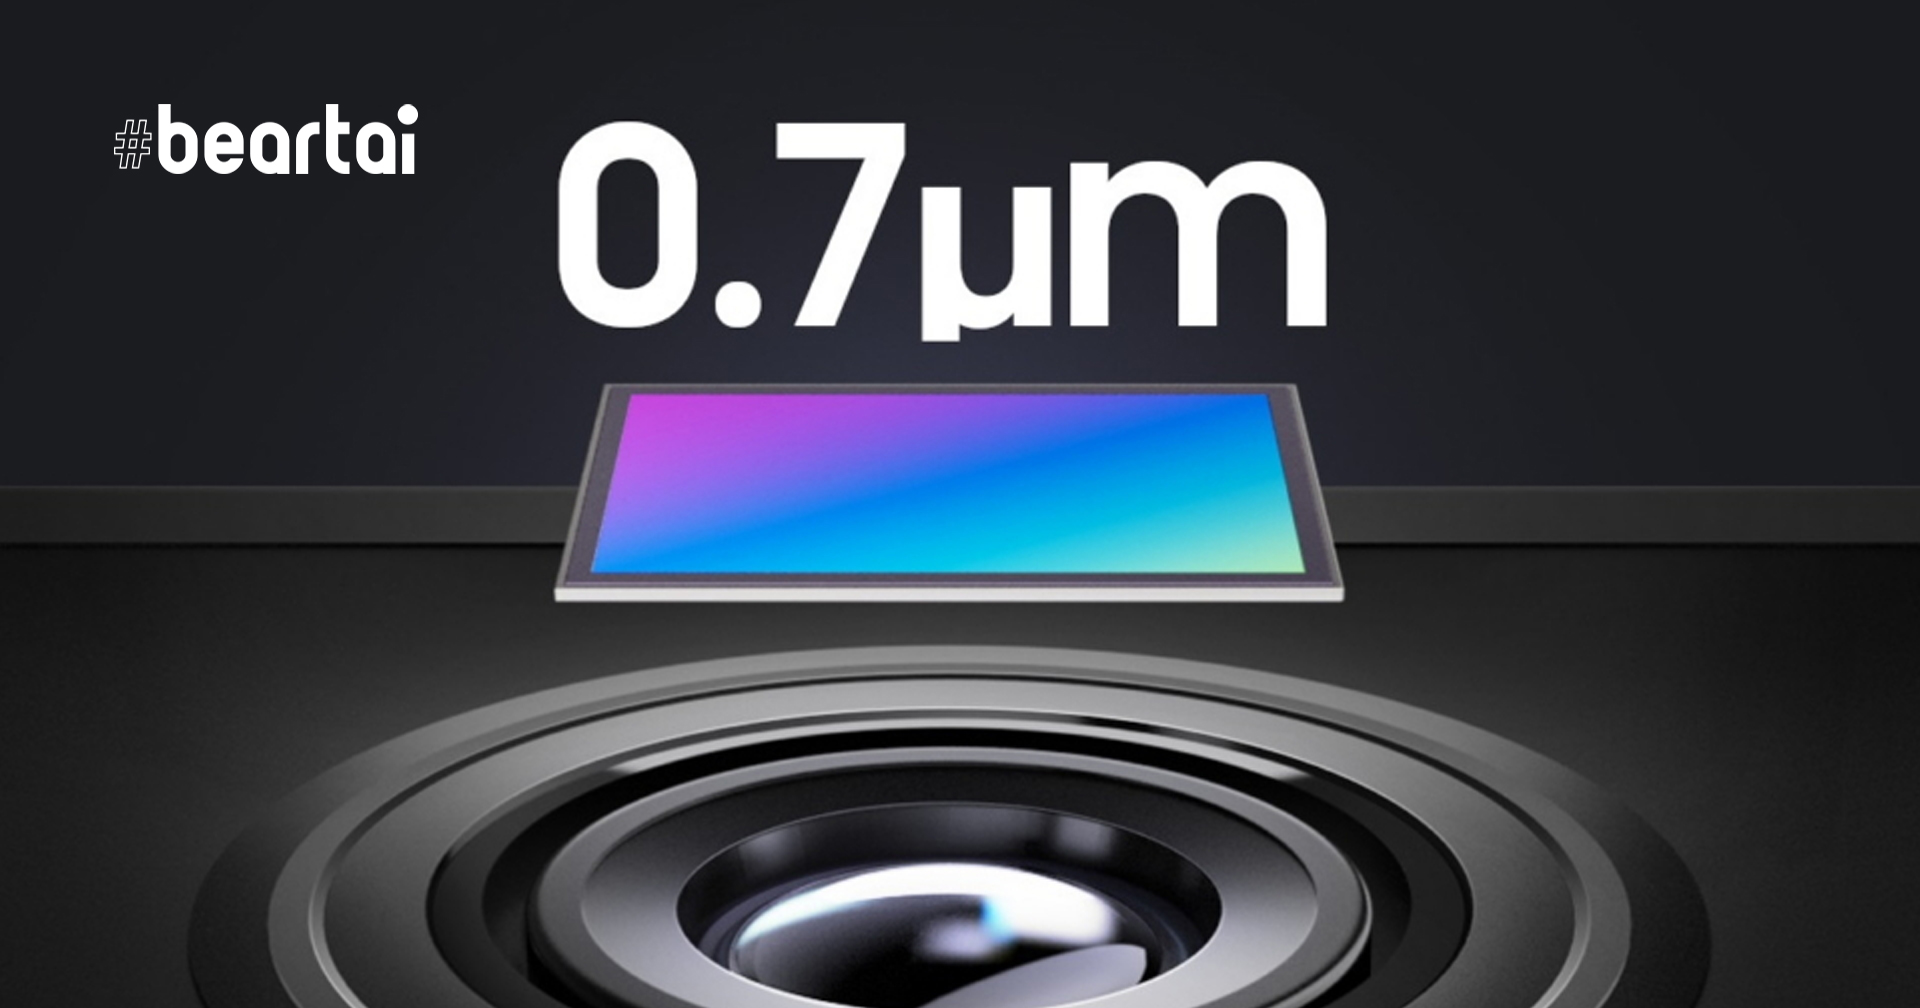 Samsung เปิดตัวเซนเซอร์กล้องใหม่ “ISOCELL Plus” ขนาดพิกเซลเล็กสุดเพียง 0.7µm